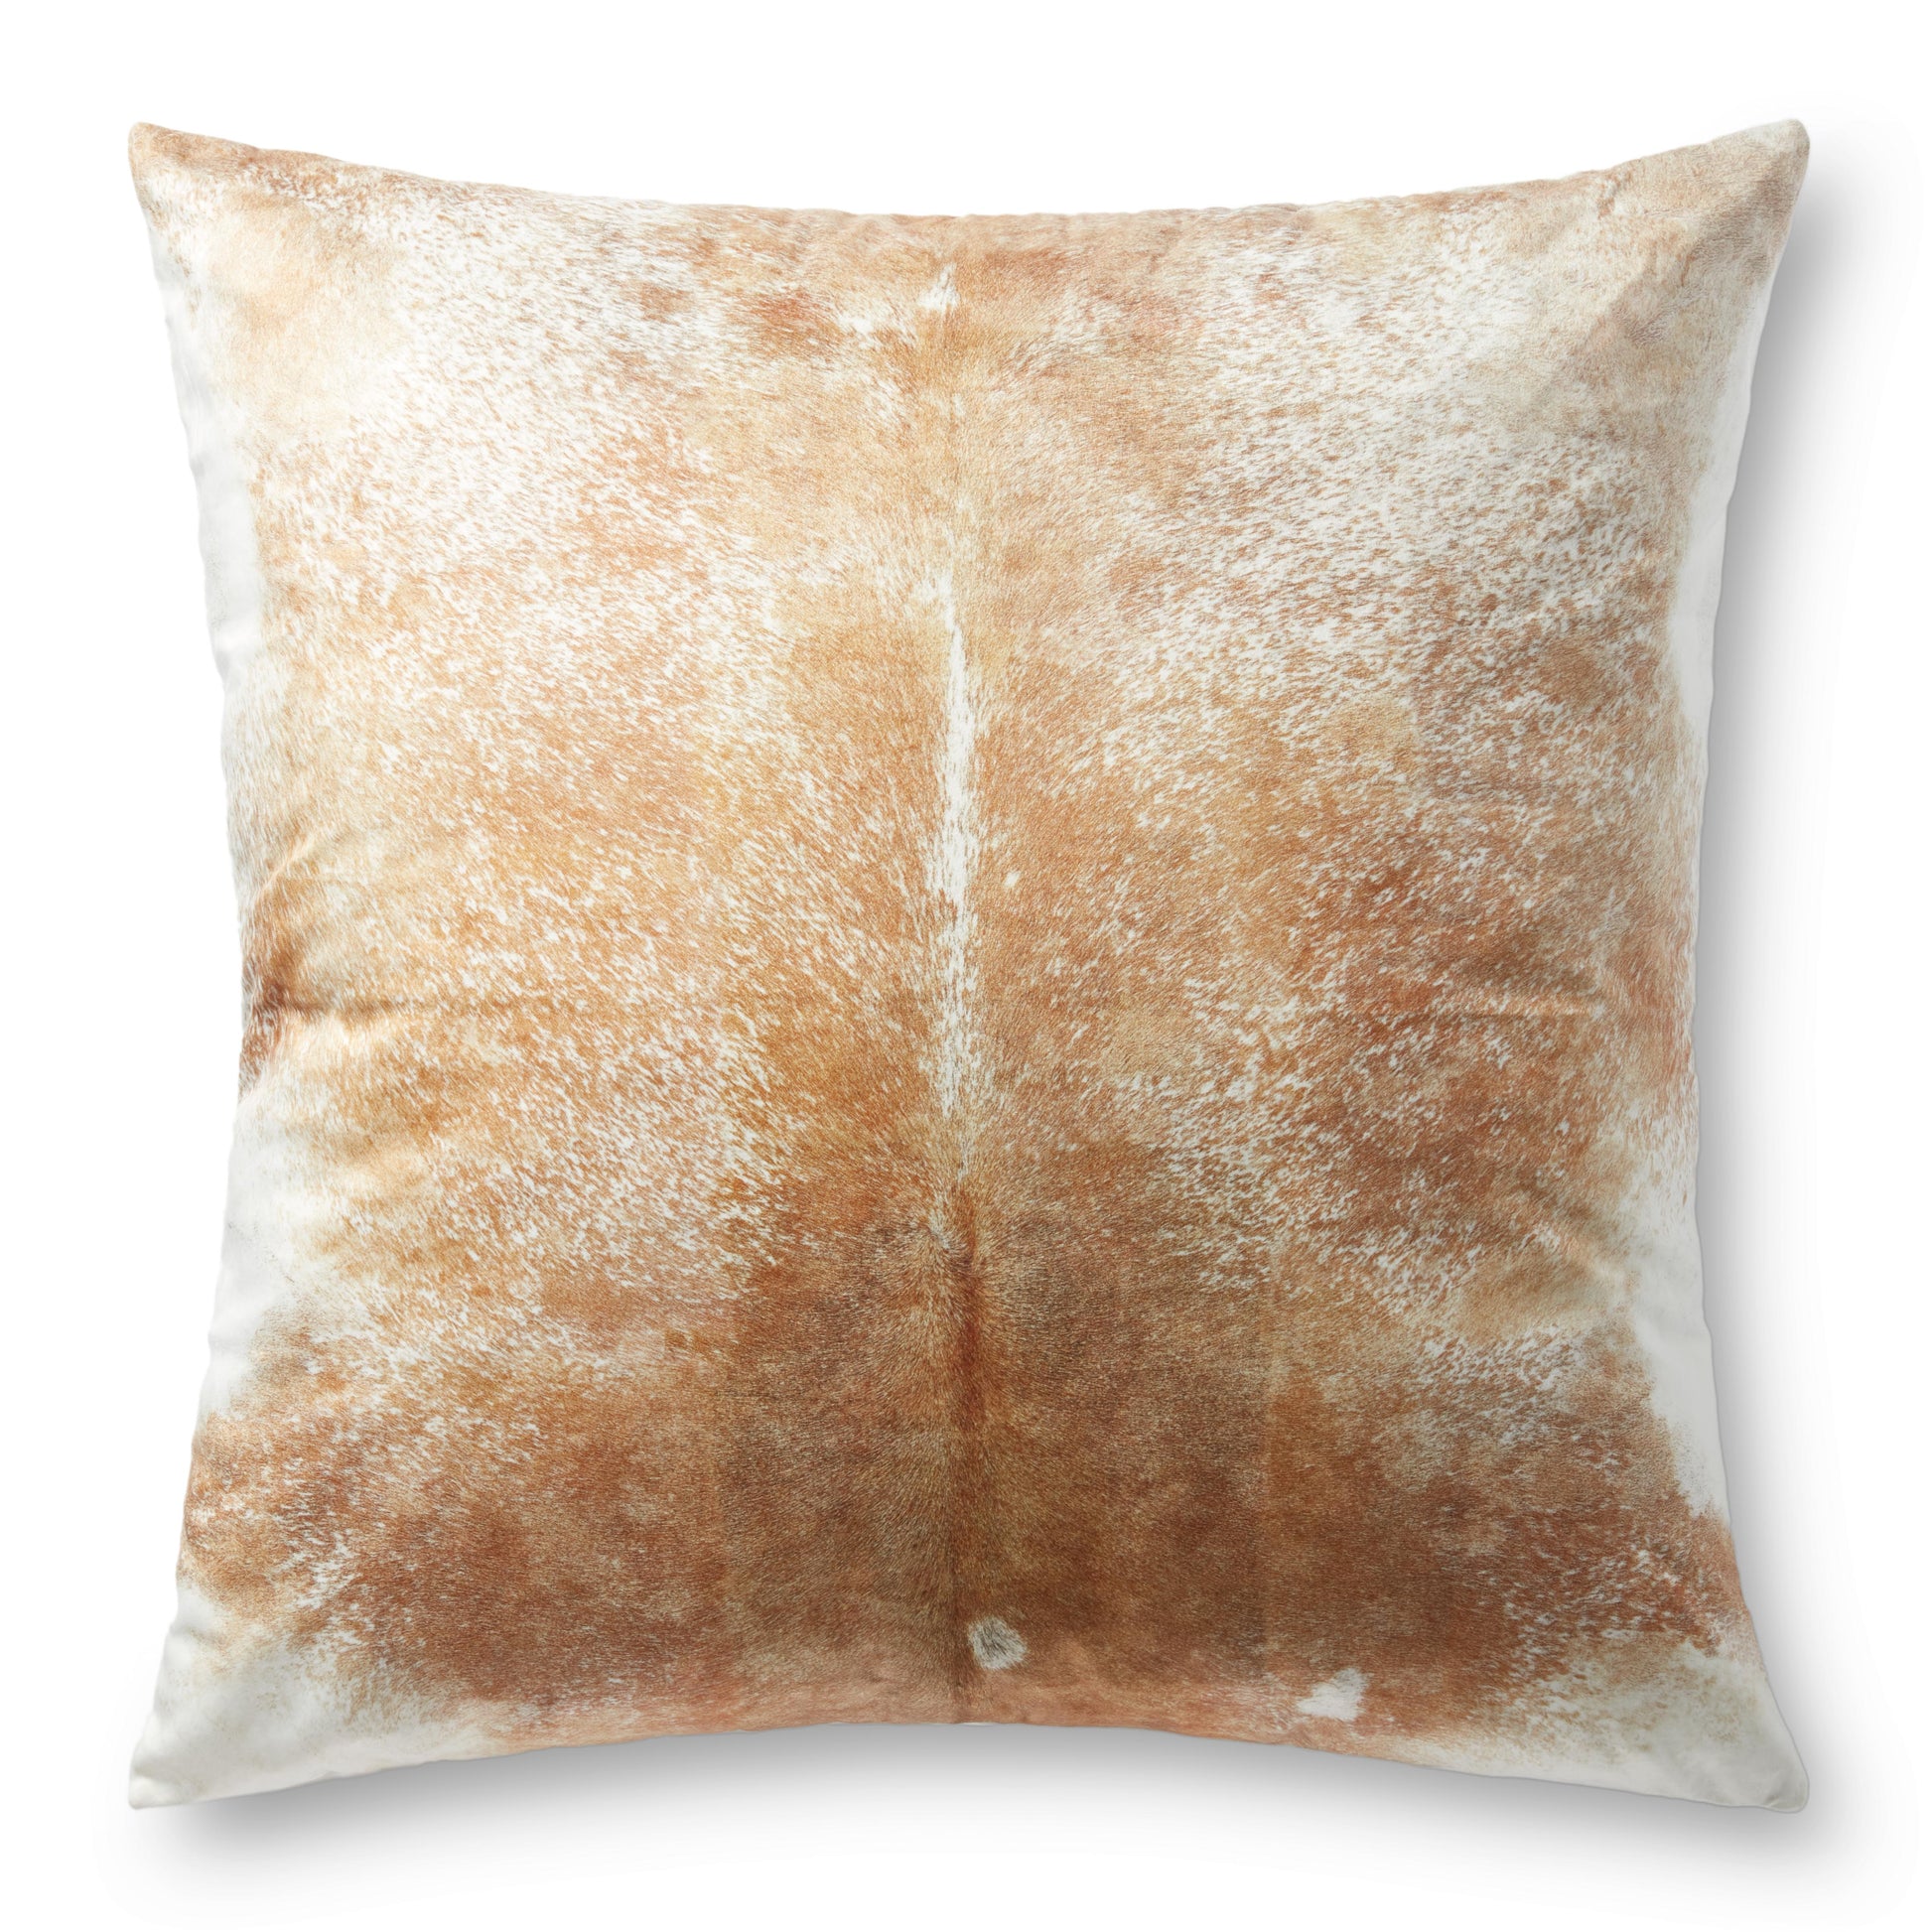 Photo of a pillow;  FP0002 Beige / White 36"W x 36"D x 6"H Pillow